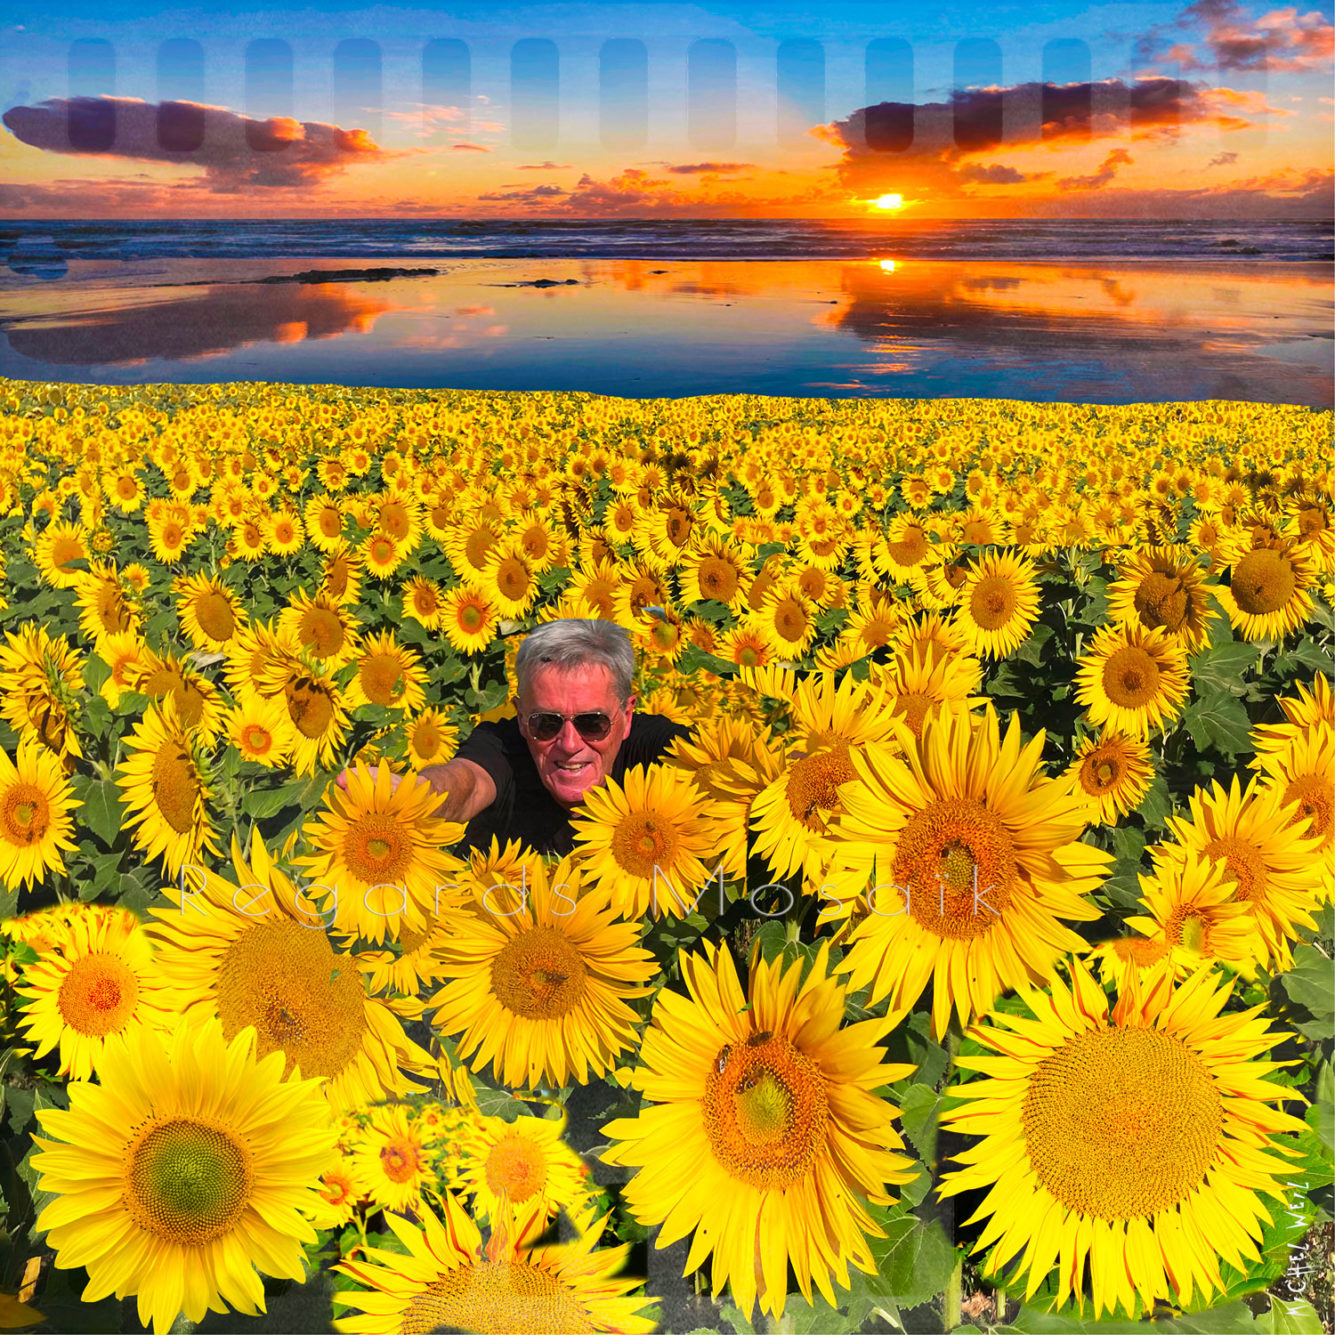 Swimming in Sunflower